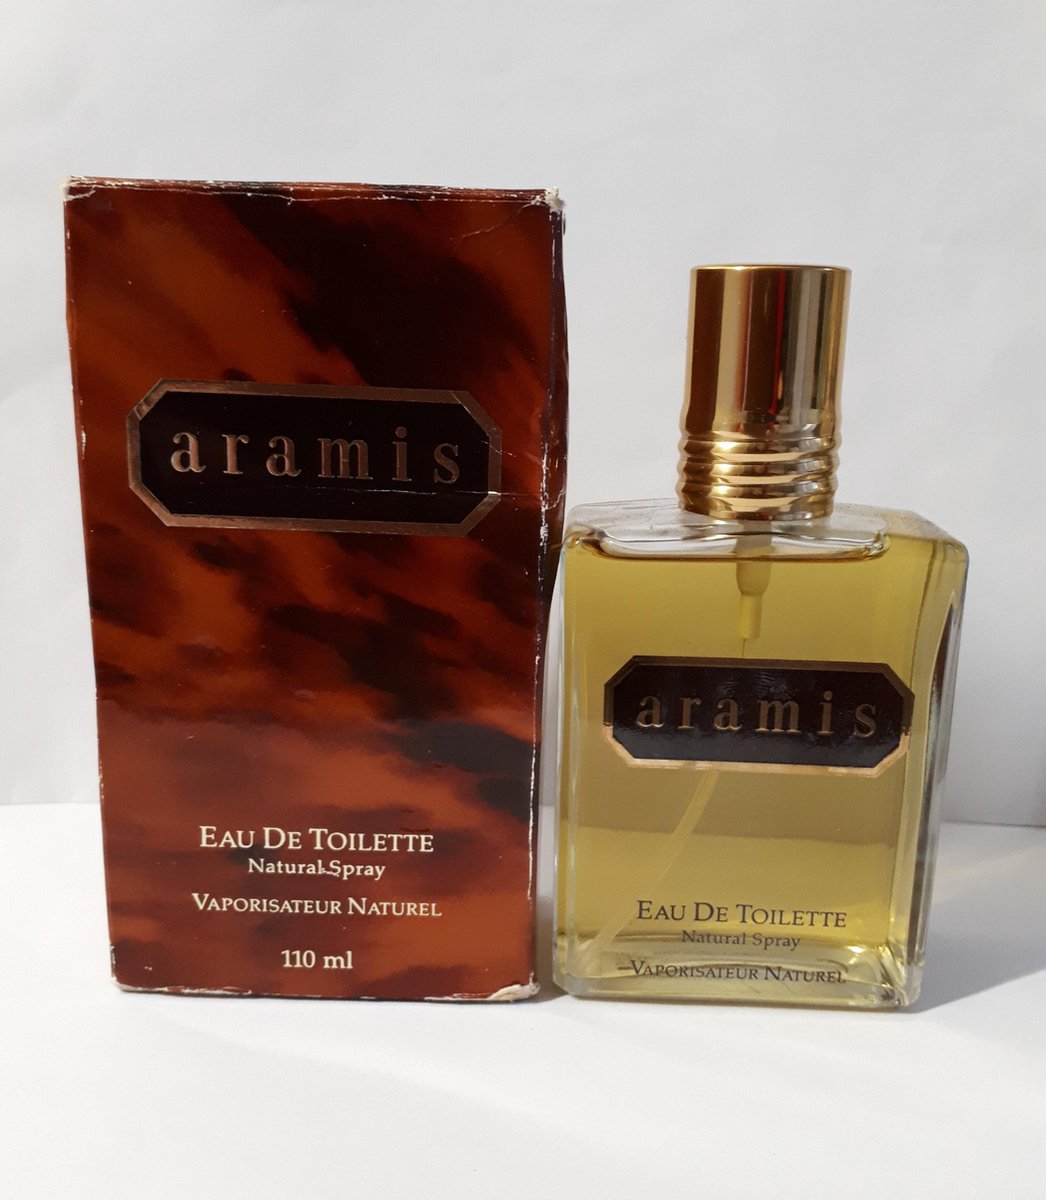 ARAMIS, Aramis, Eau de toilette, 110 ml, spray - Vintage